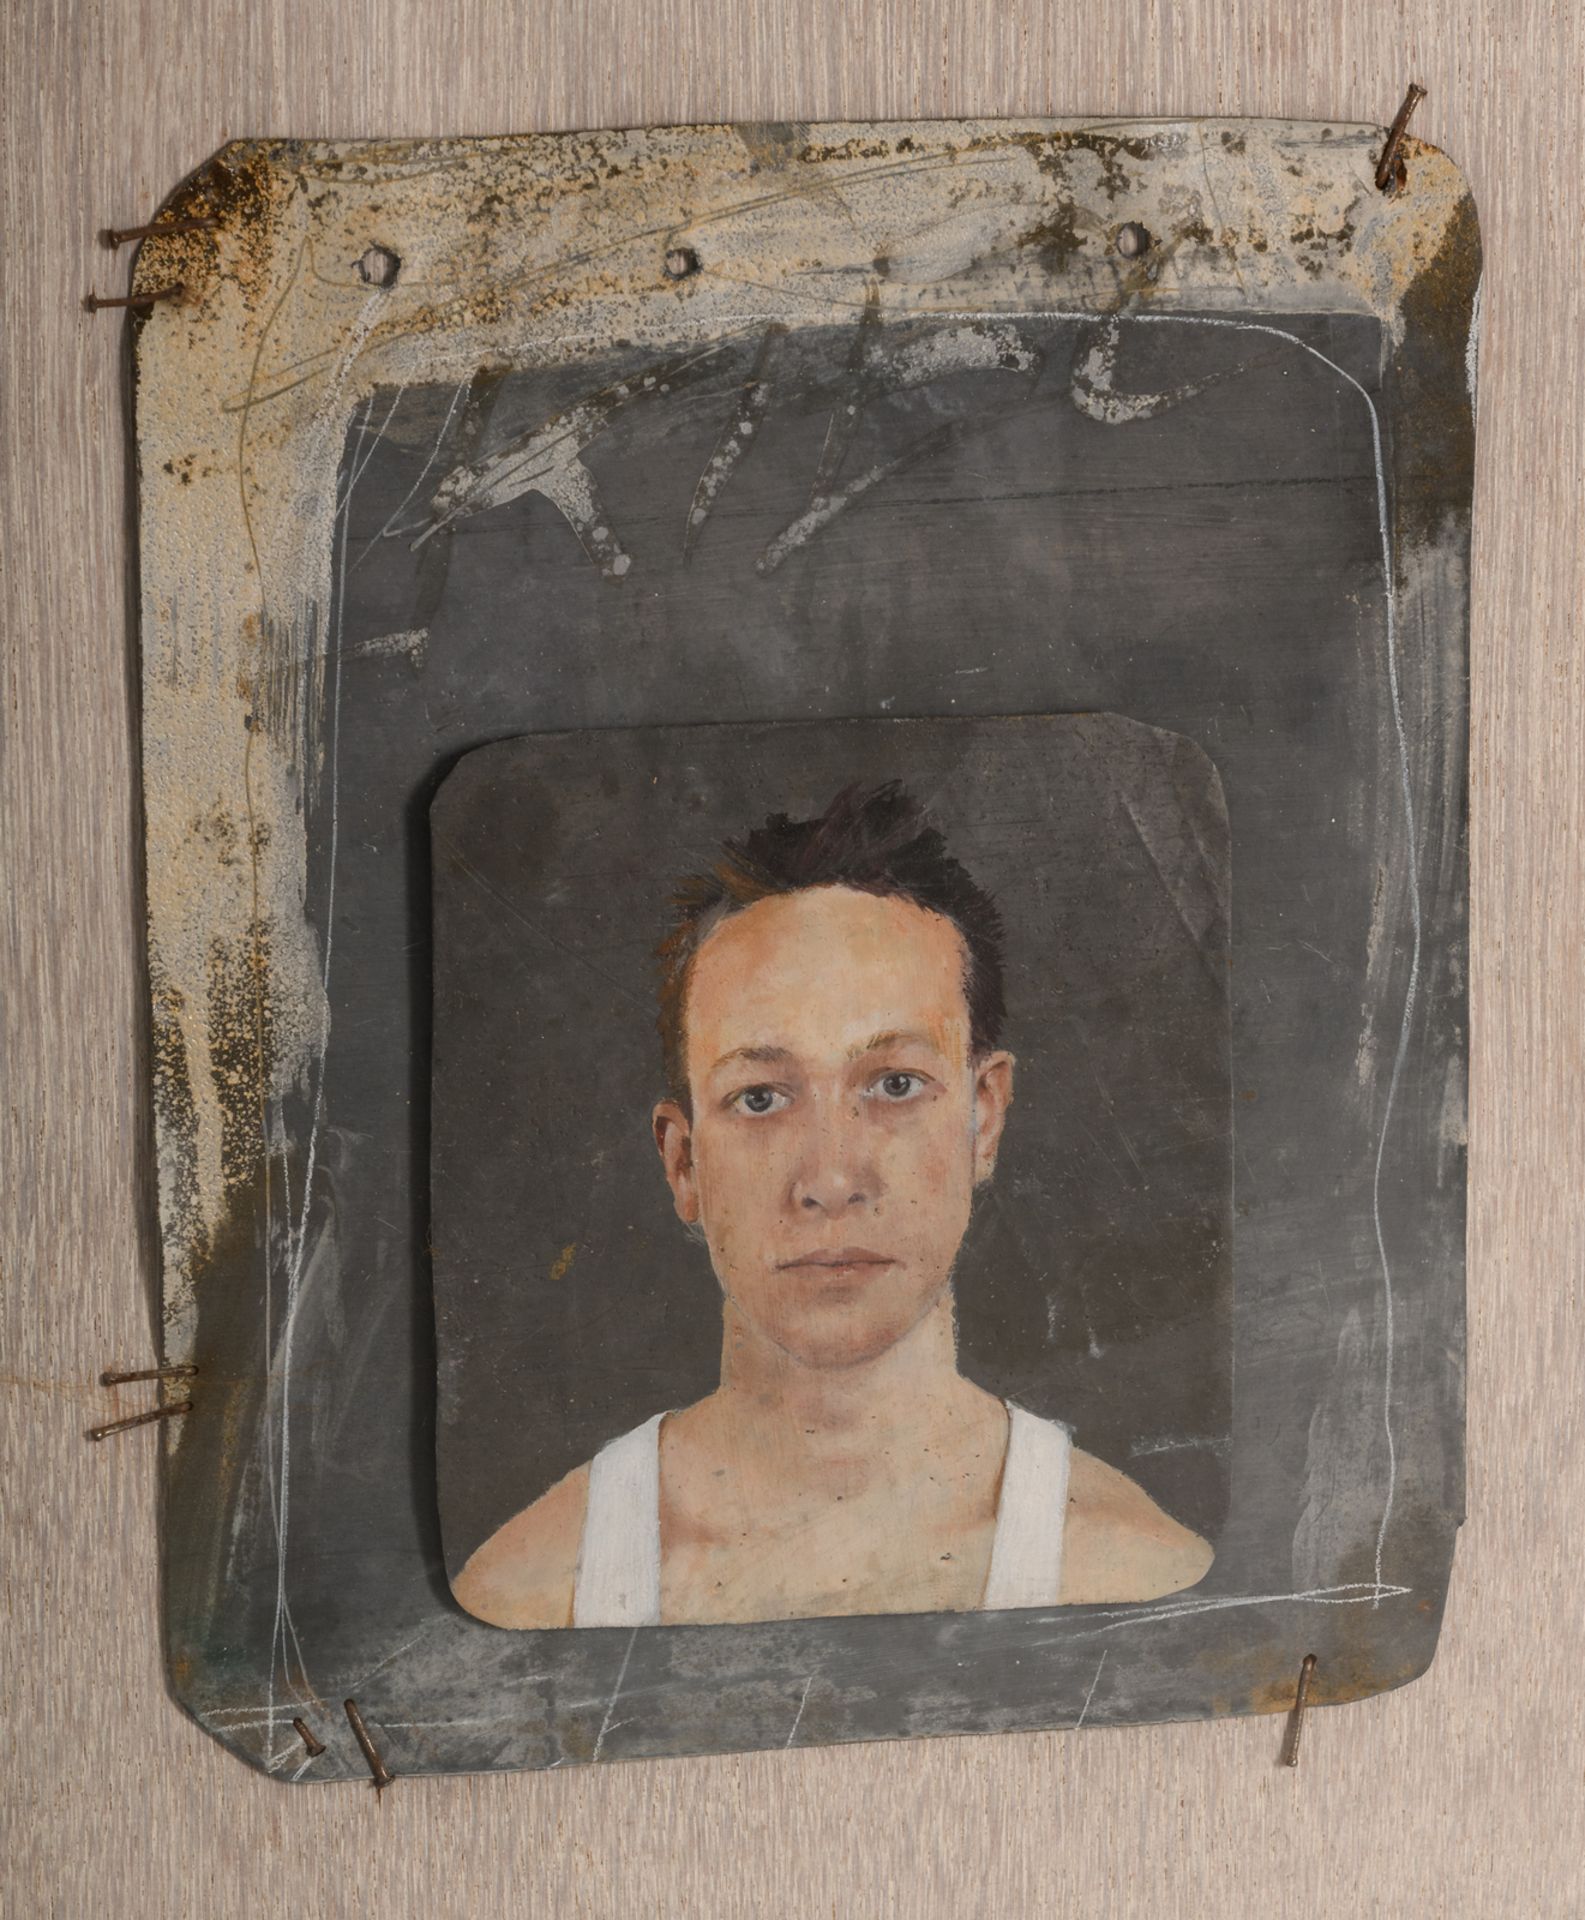 Michiels D., 'Max', oil on zinc, in a plexi box, 41 x 51 cm - Image 5 of 5